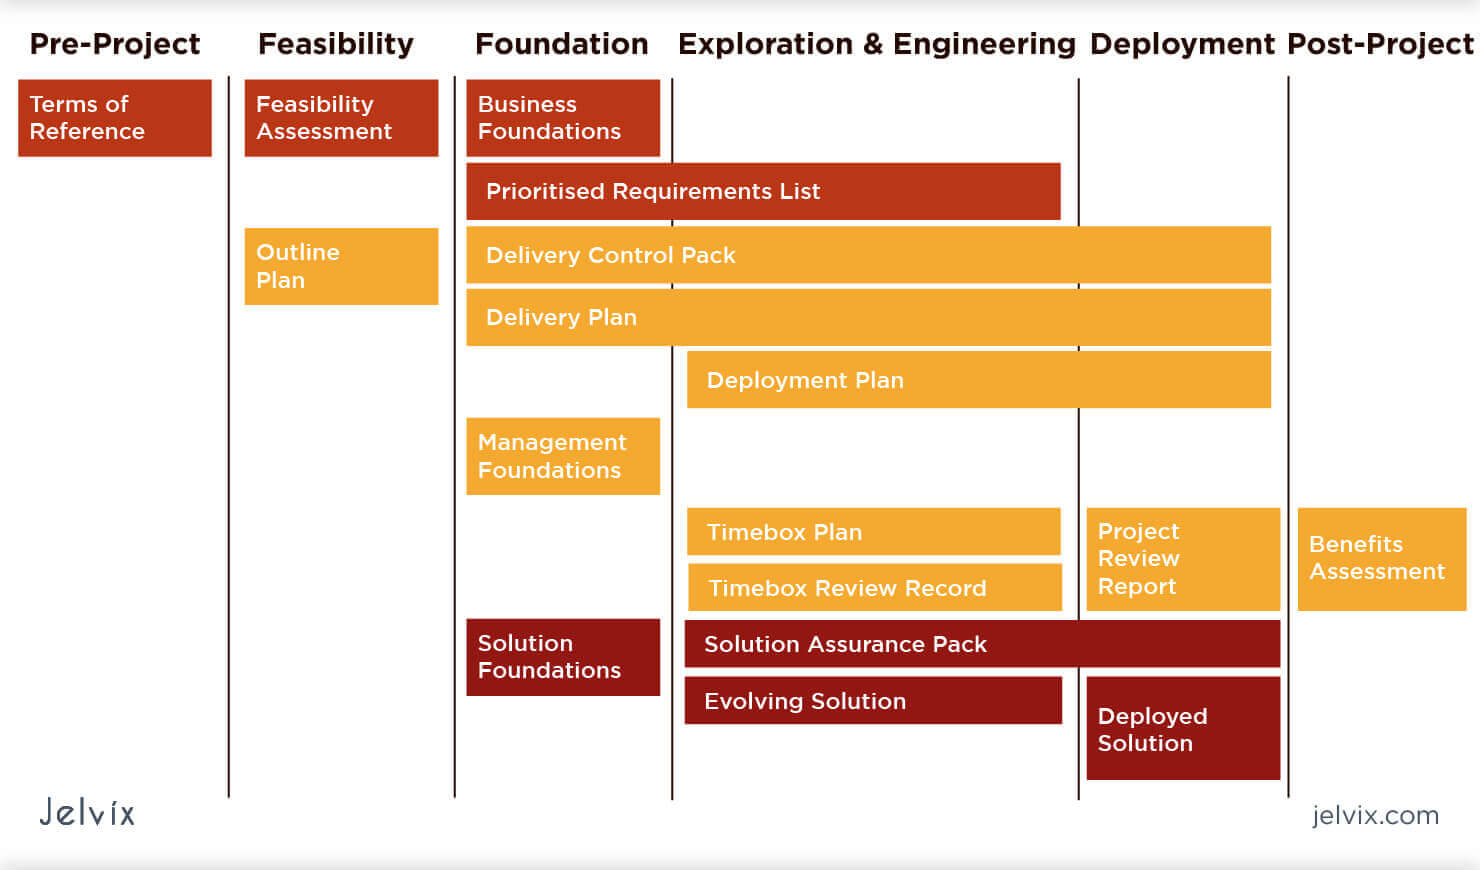 software development agency business plan